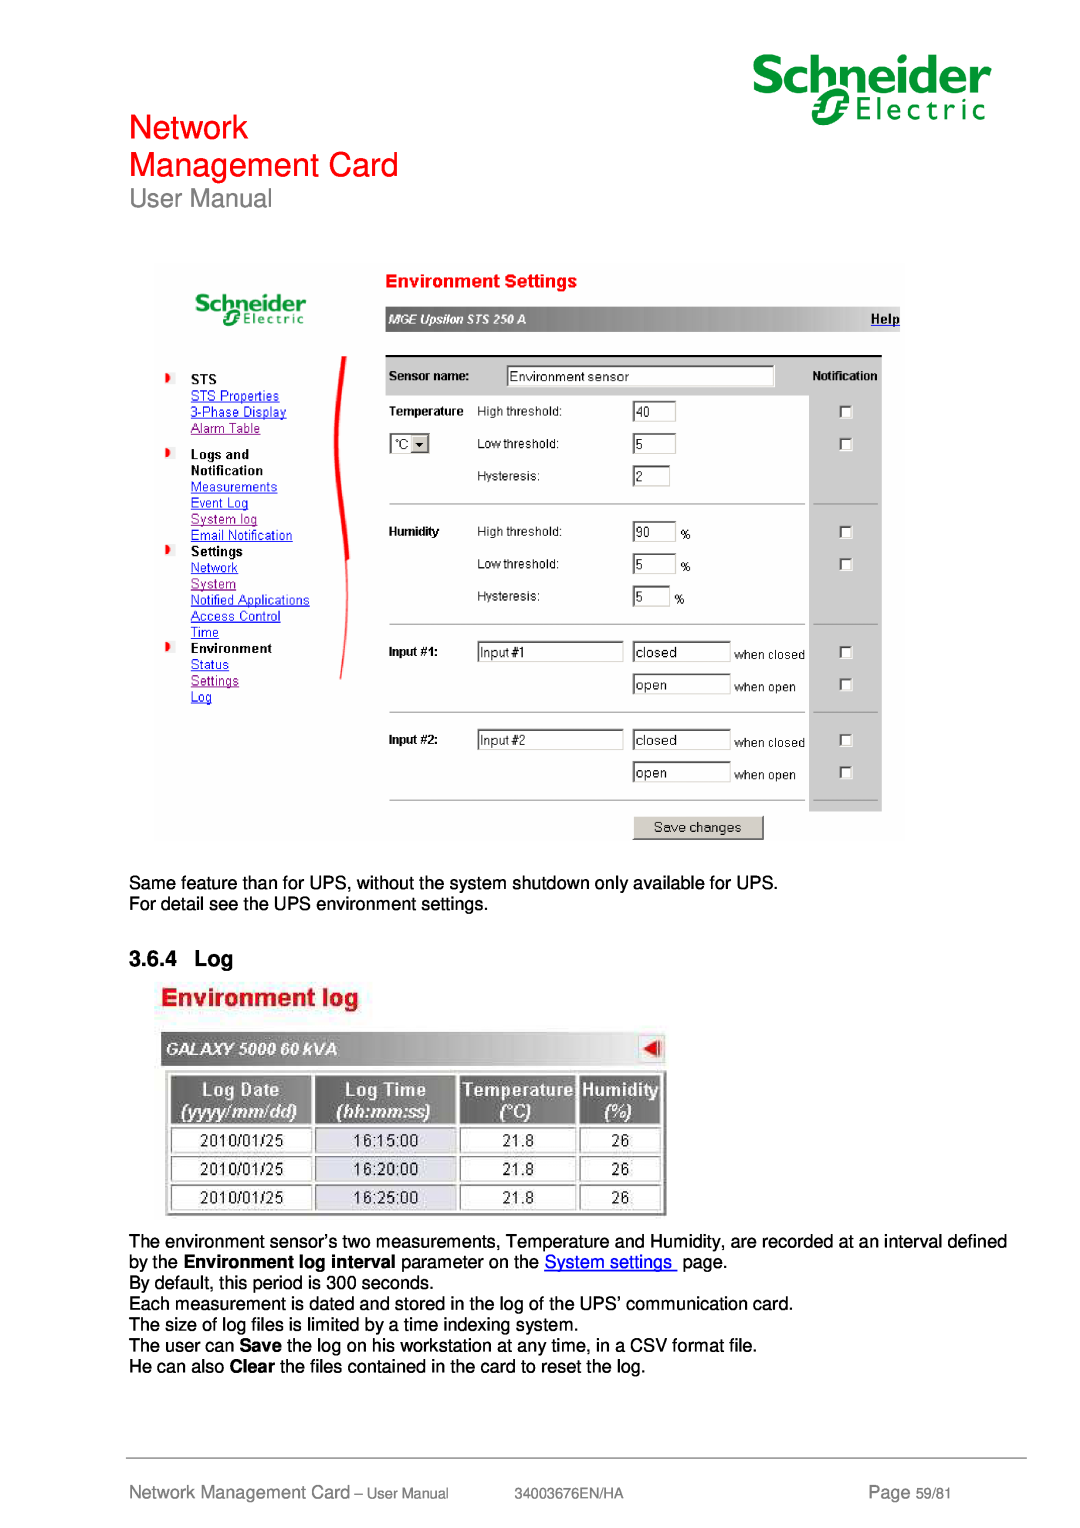 Schneider Electric 66074, 66846 user manual 3.6.4 Log, Network Management Card - User Manual, Page 59/81 